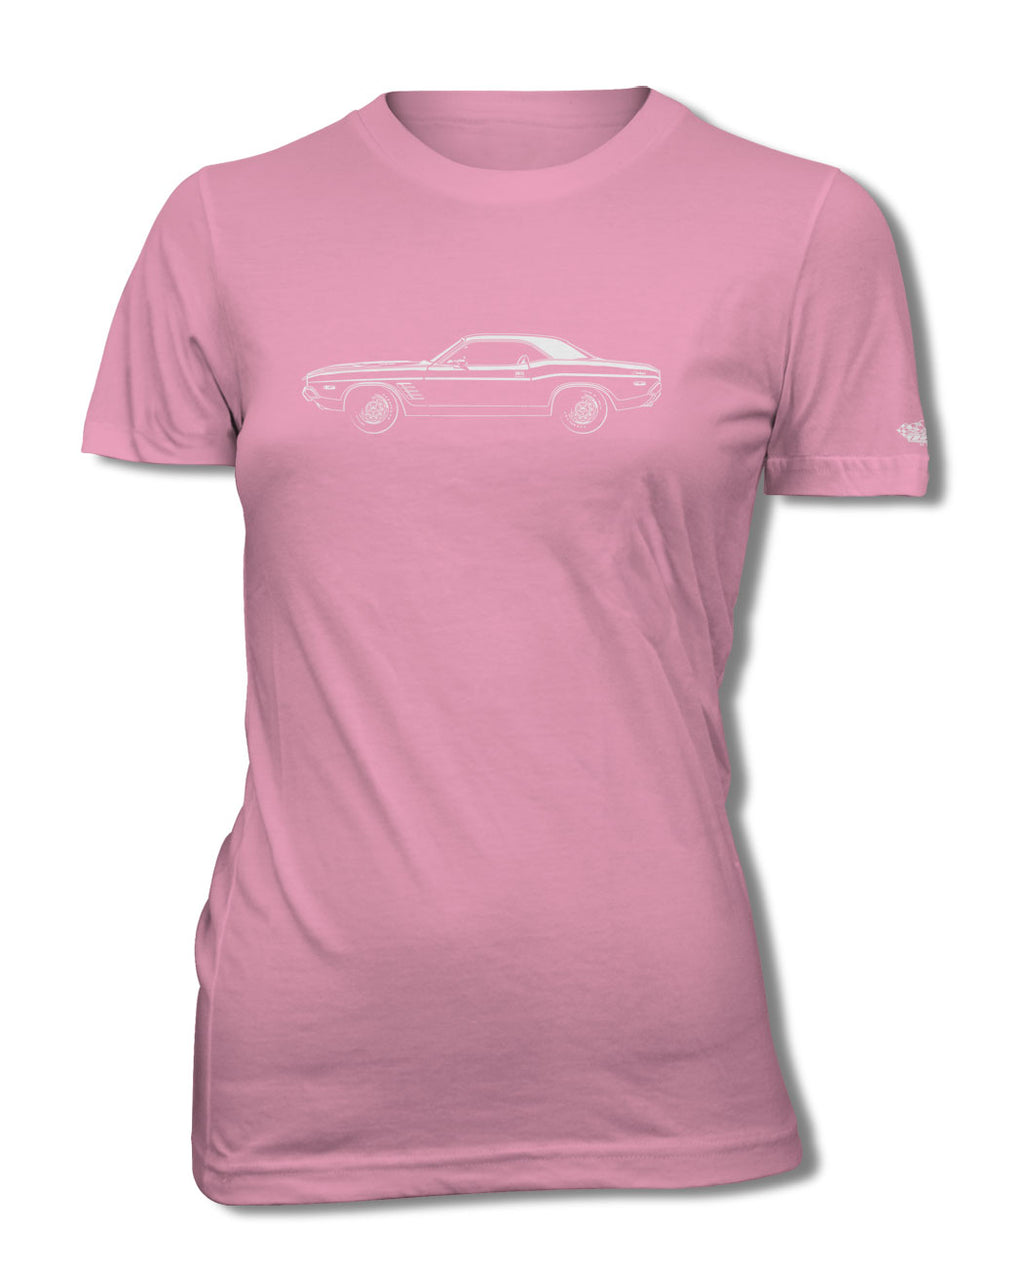 1972 Dodge Challenger Rallye Coupe T-Shirt - Women - Side View